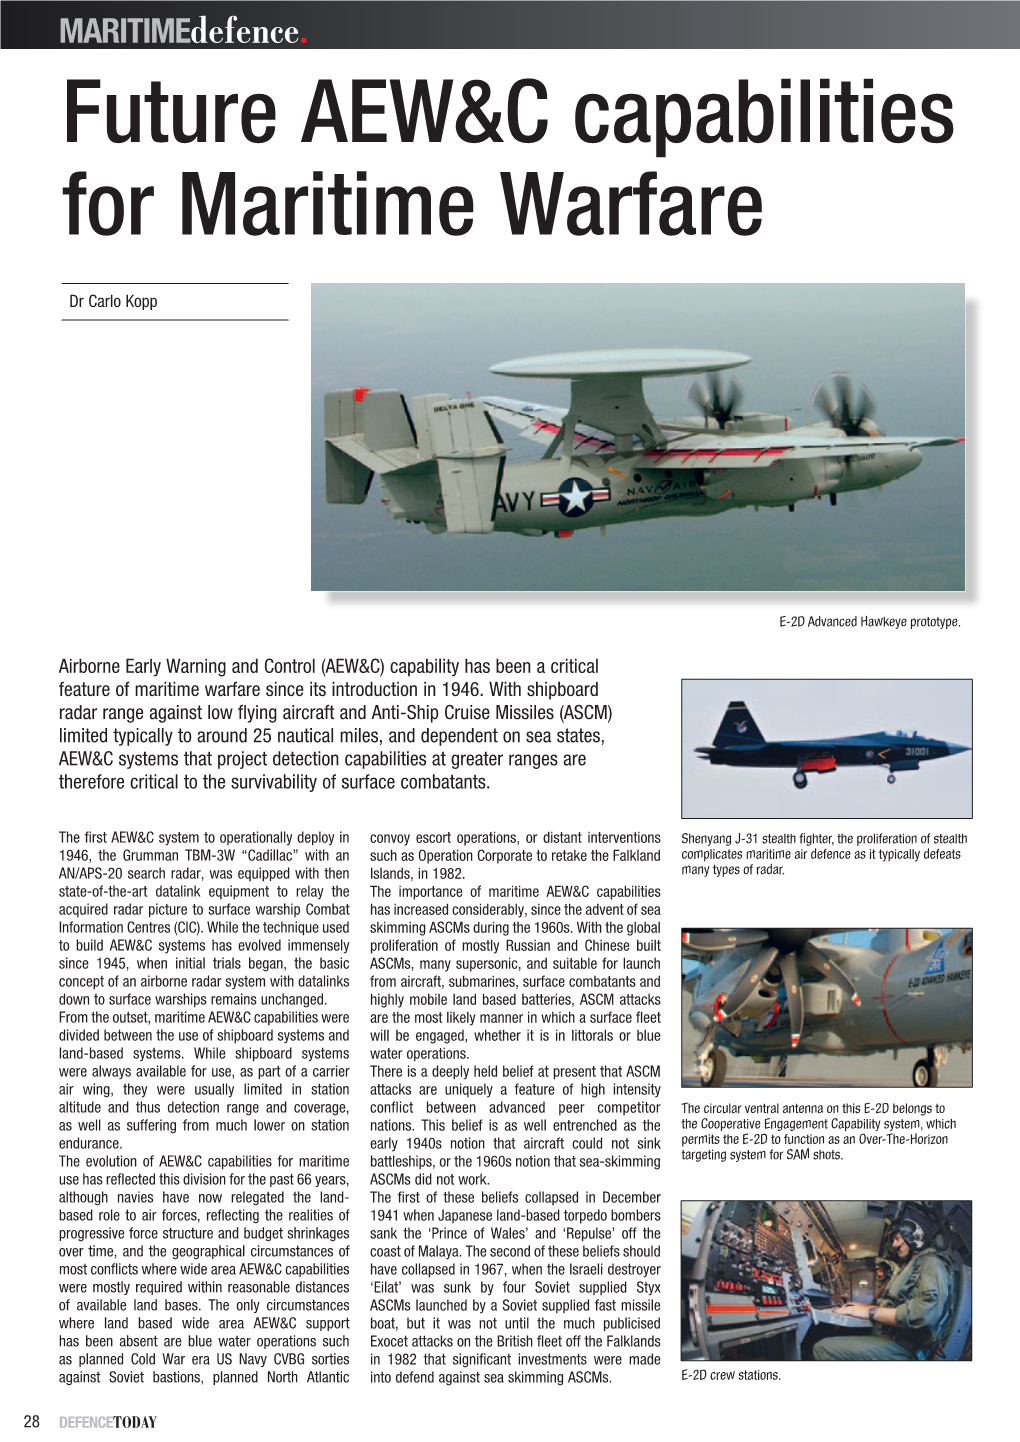 Future AEW&C Capabilities for Maritime Warfare